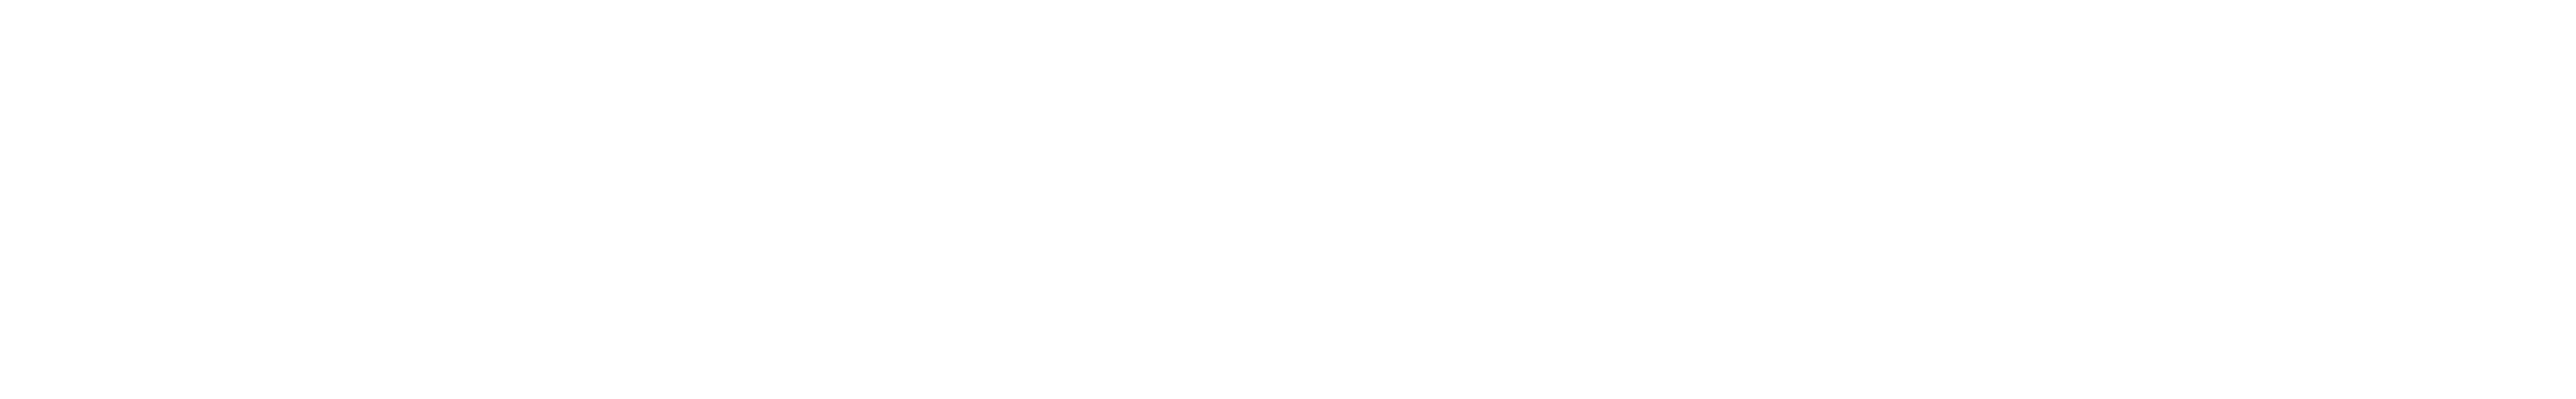 MetatimeCoin Brand